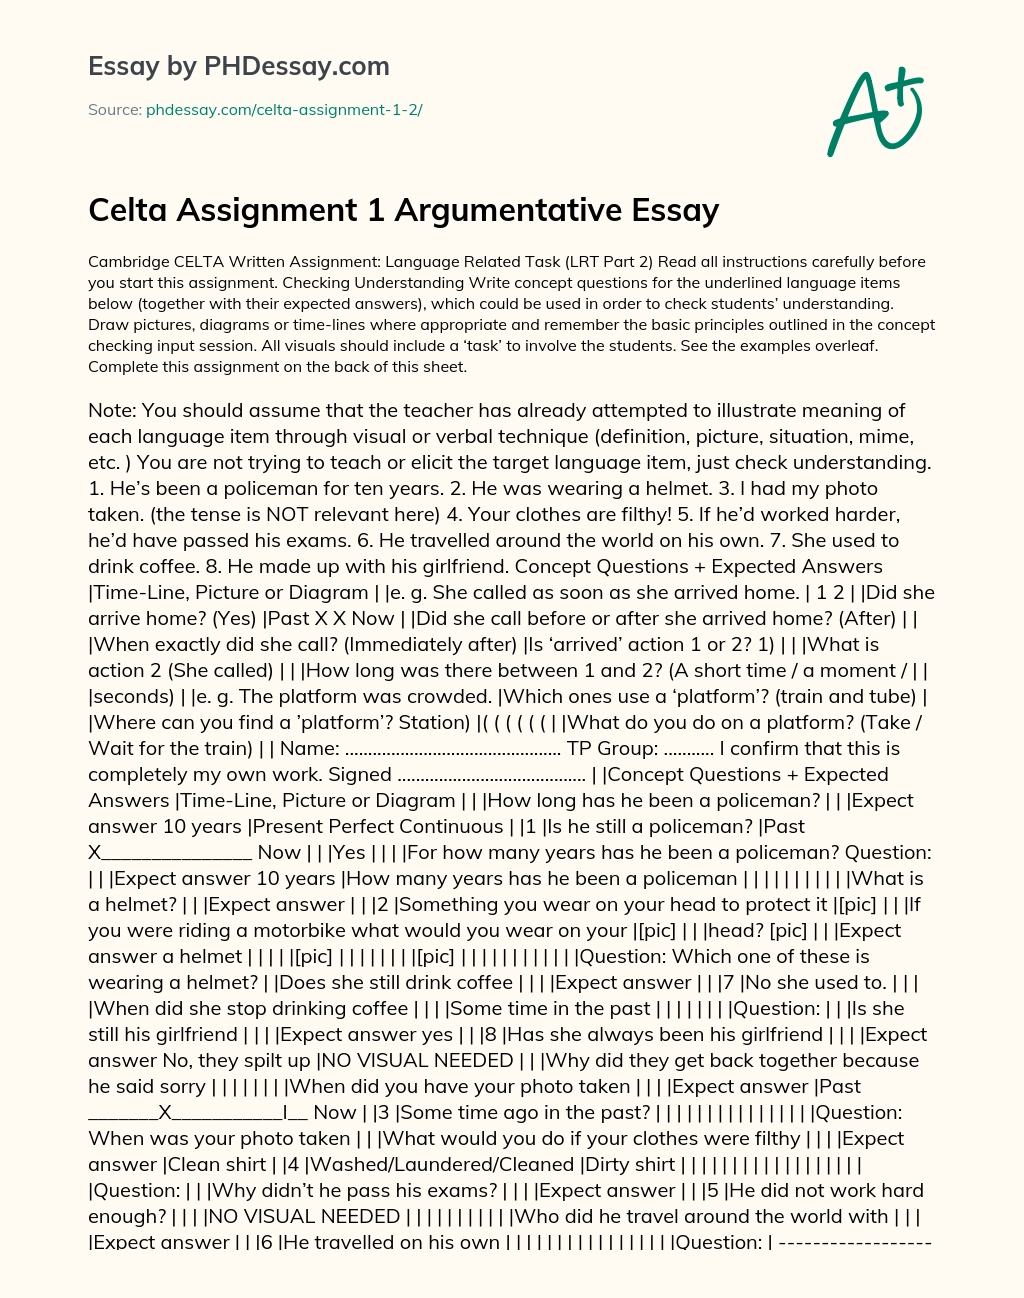 Celta Assignment 1 Argumentative Essay essay